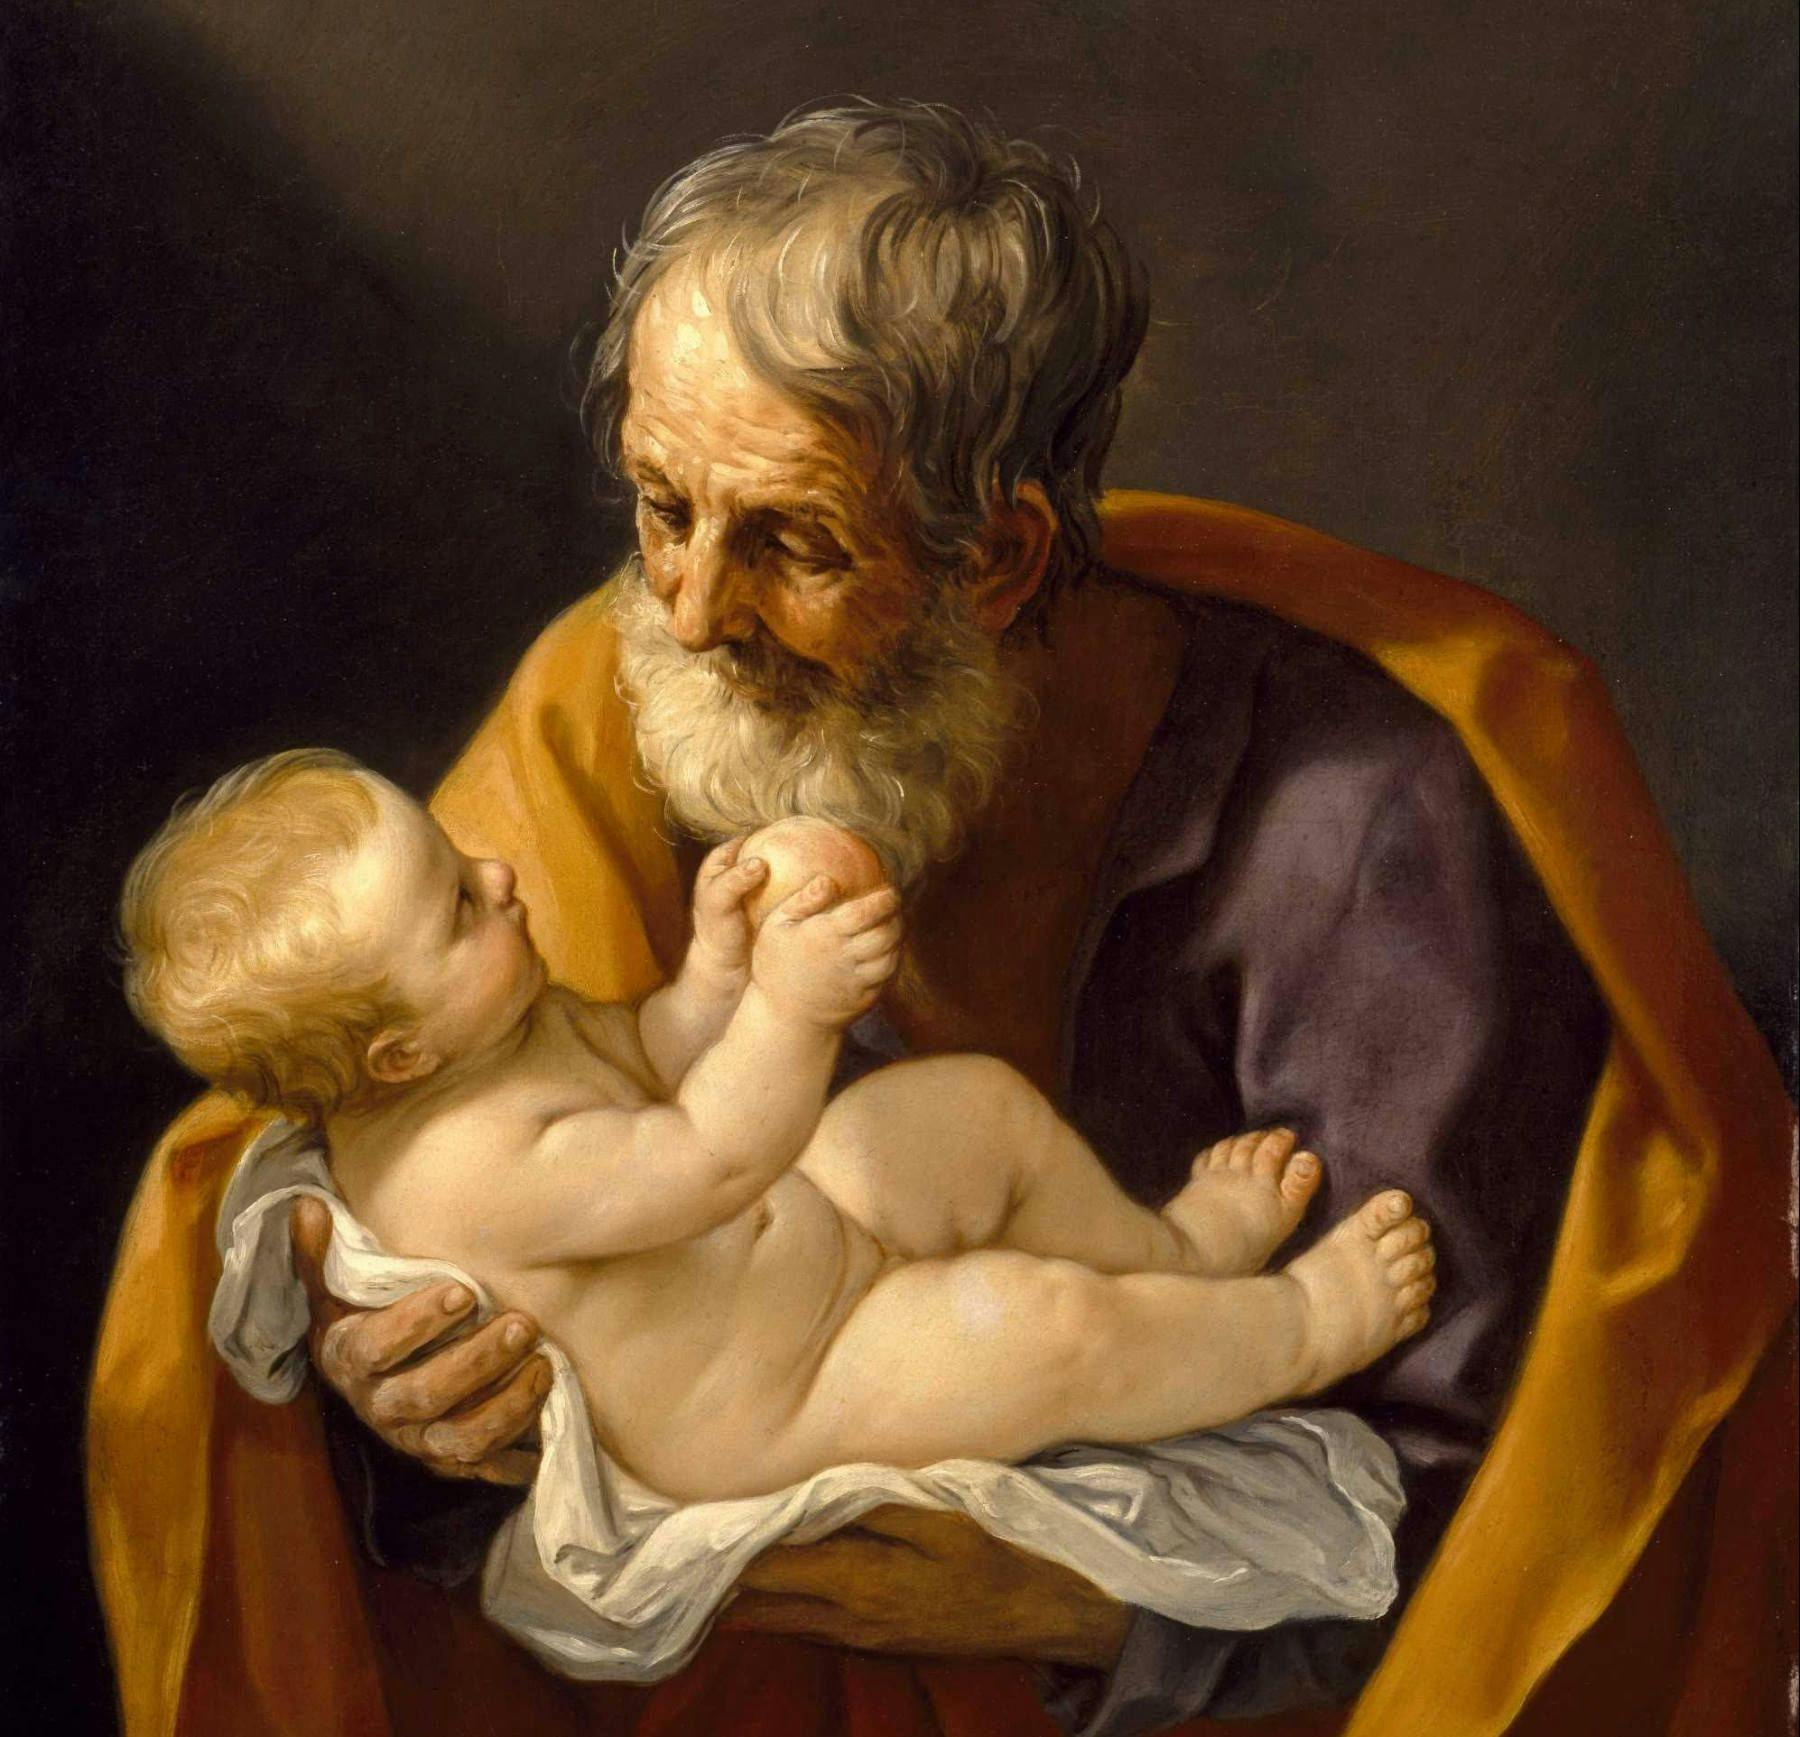 joseph holding baby jesus christ